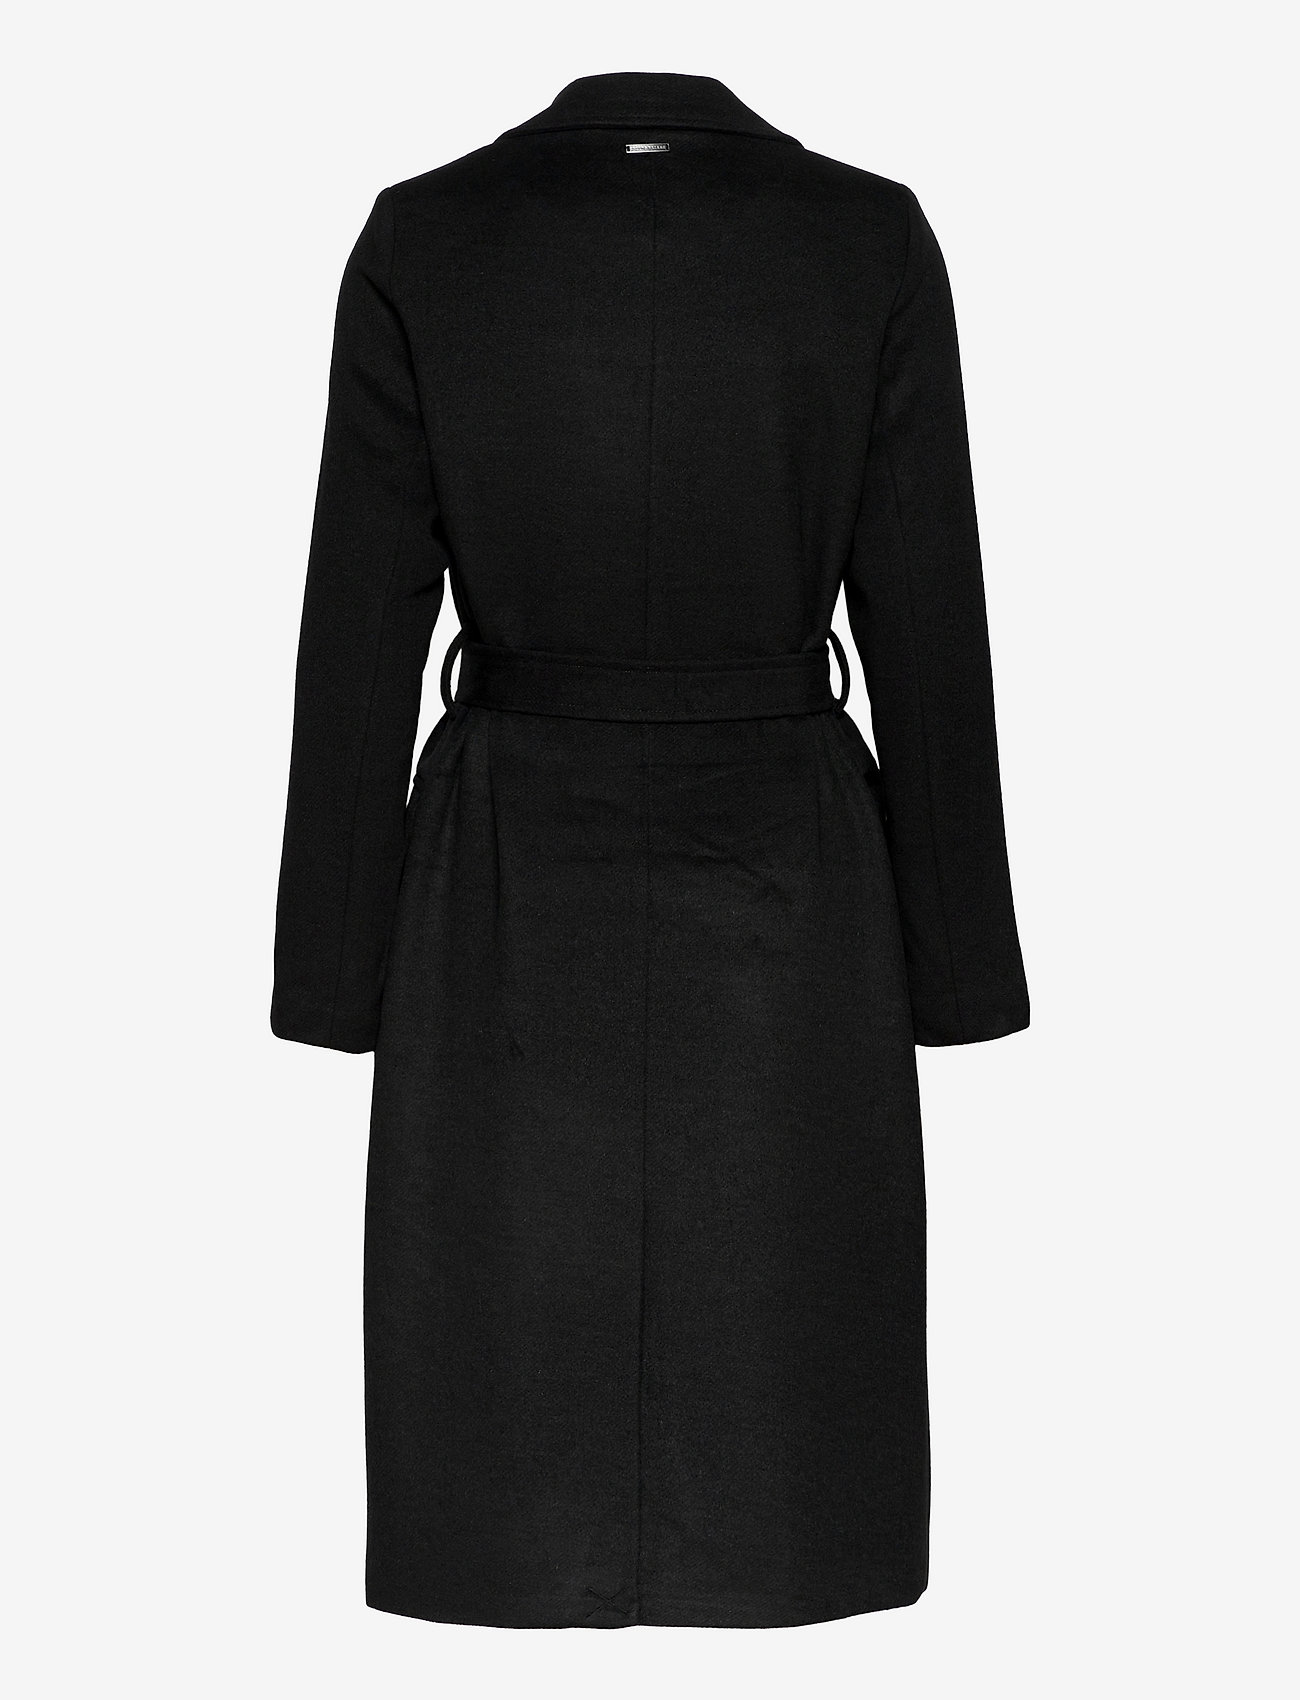 Bruuns Bazaar - CatarinaBBNovelle coat - winter coats - black - 1